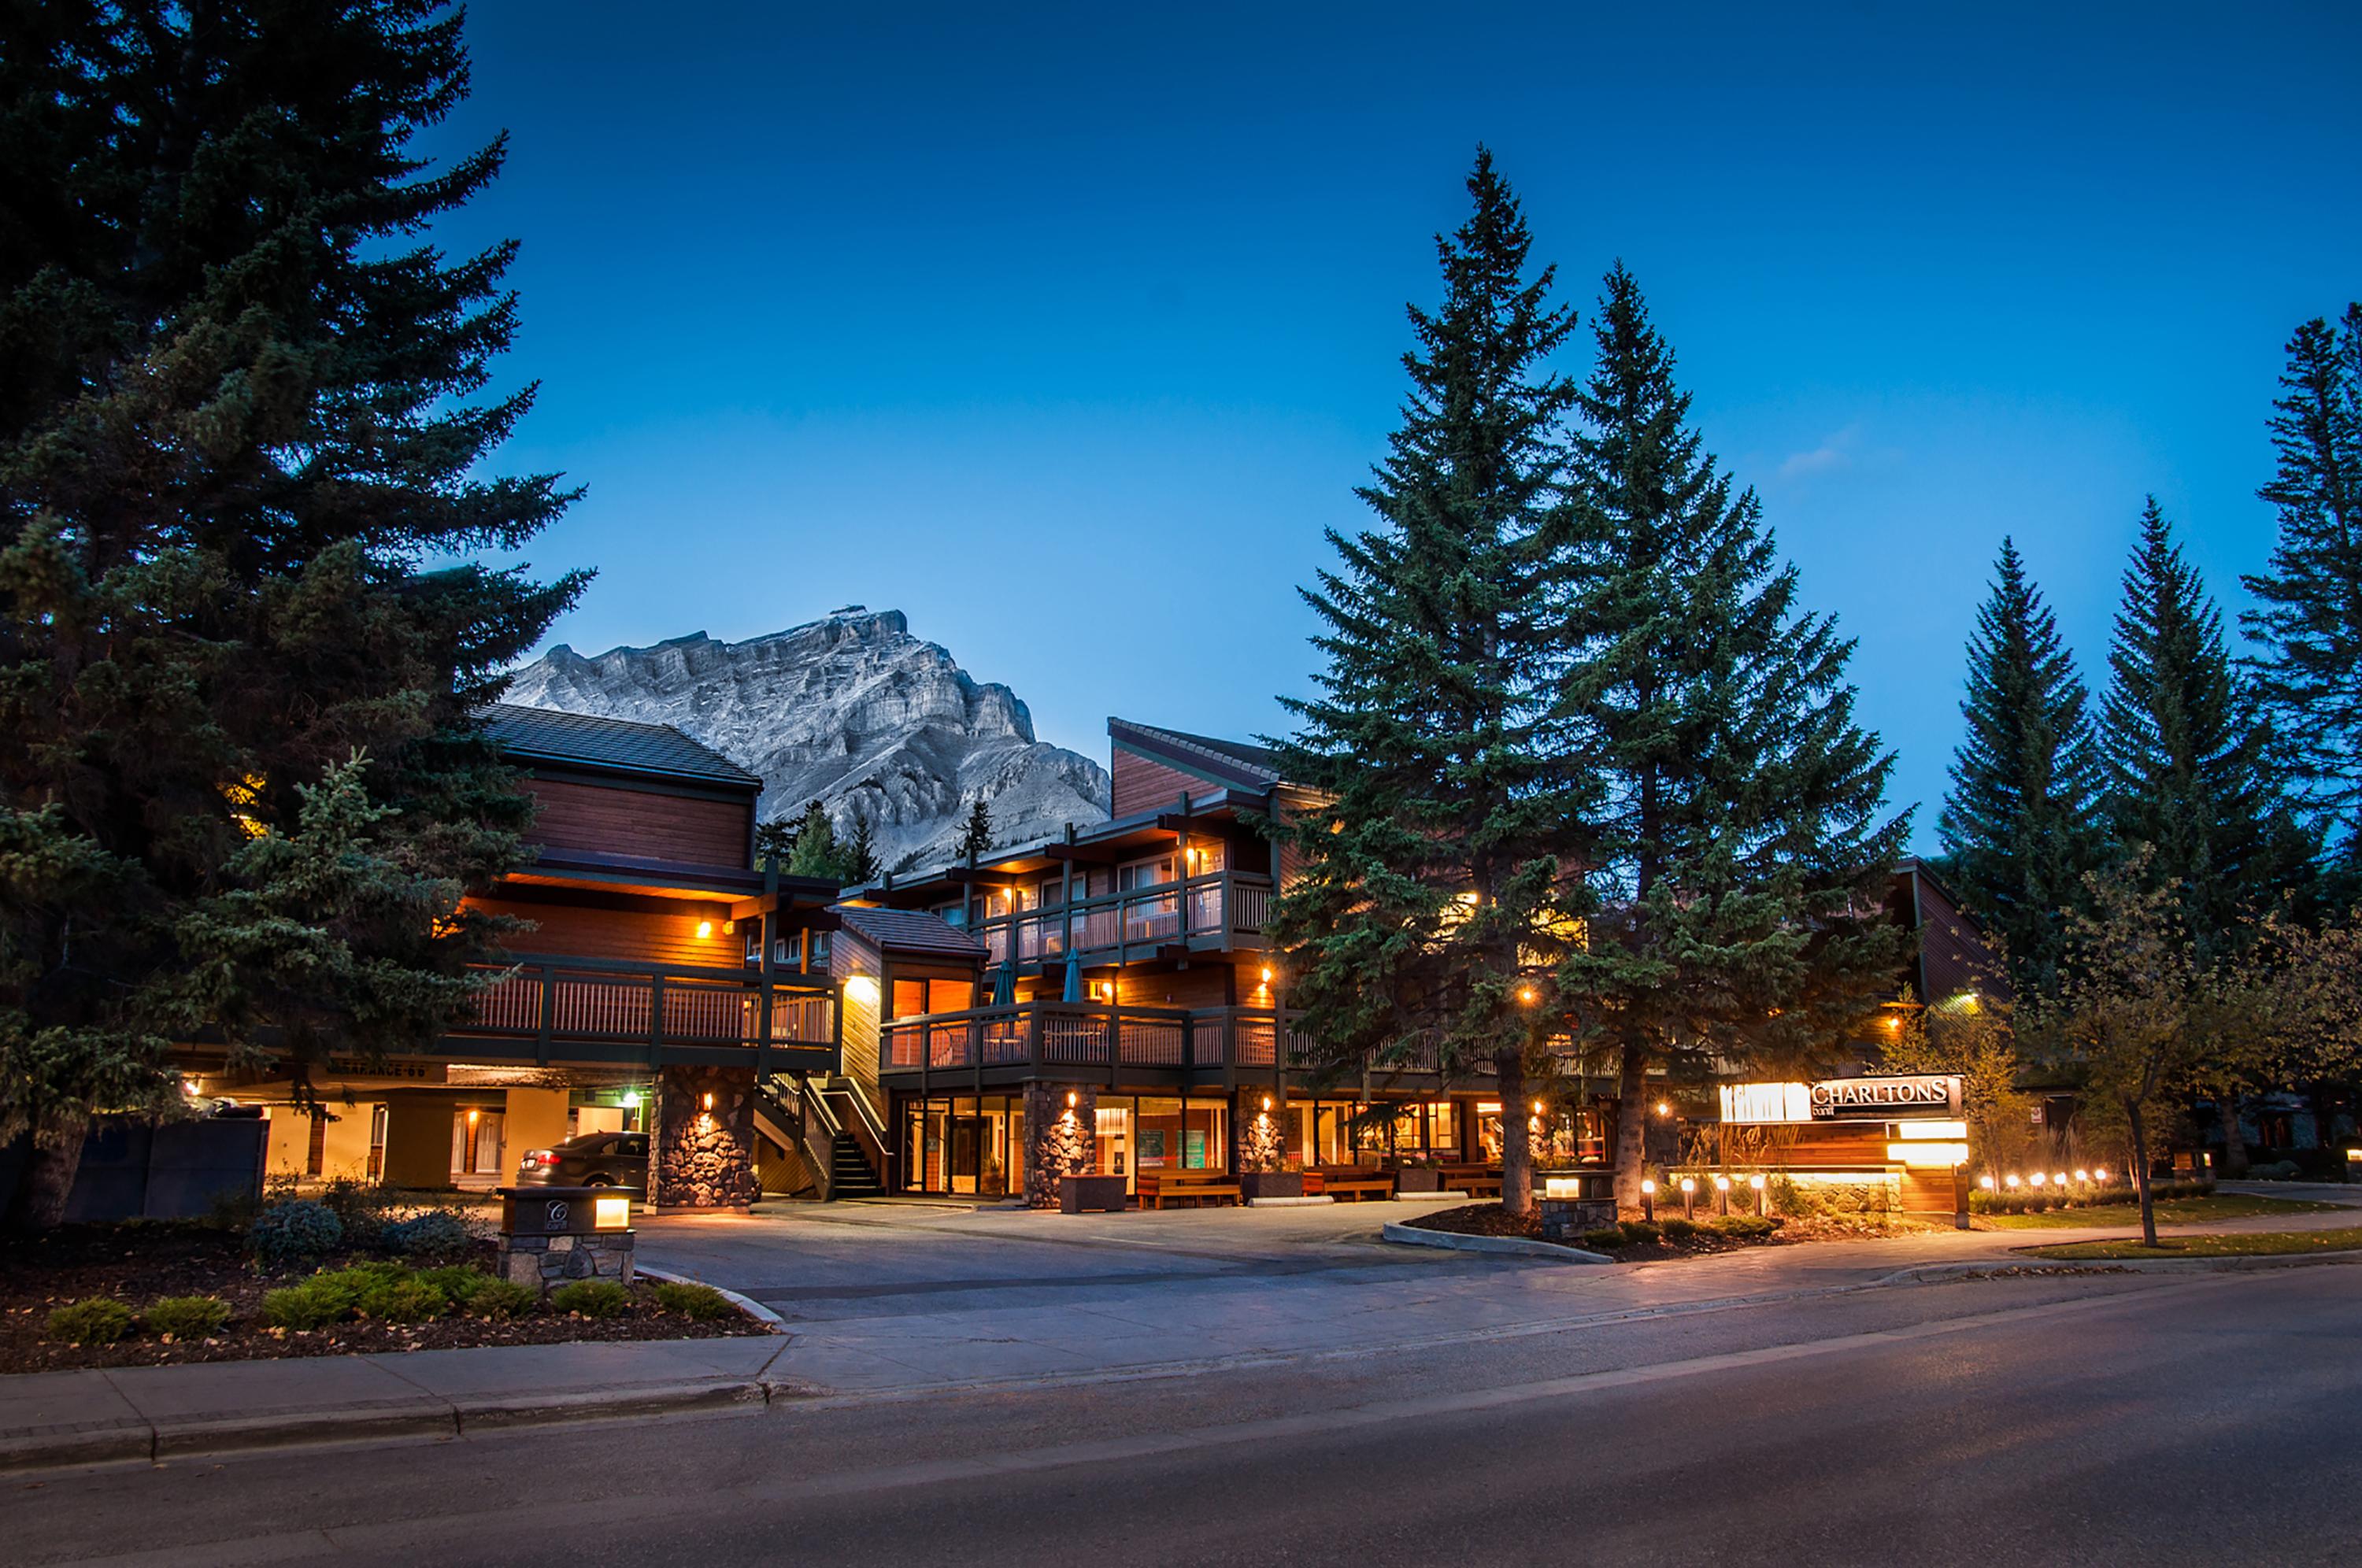 Charltons Banff Hotel Exterior photo